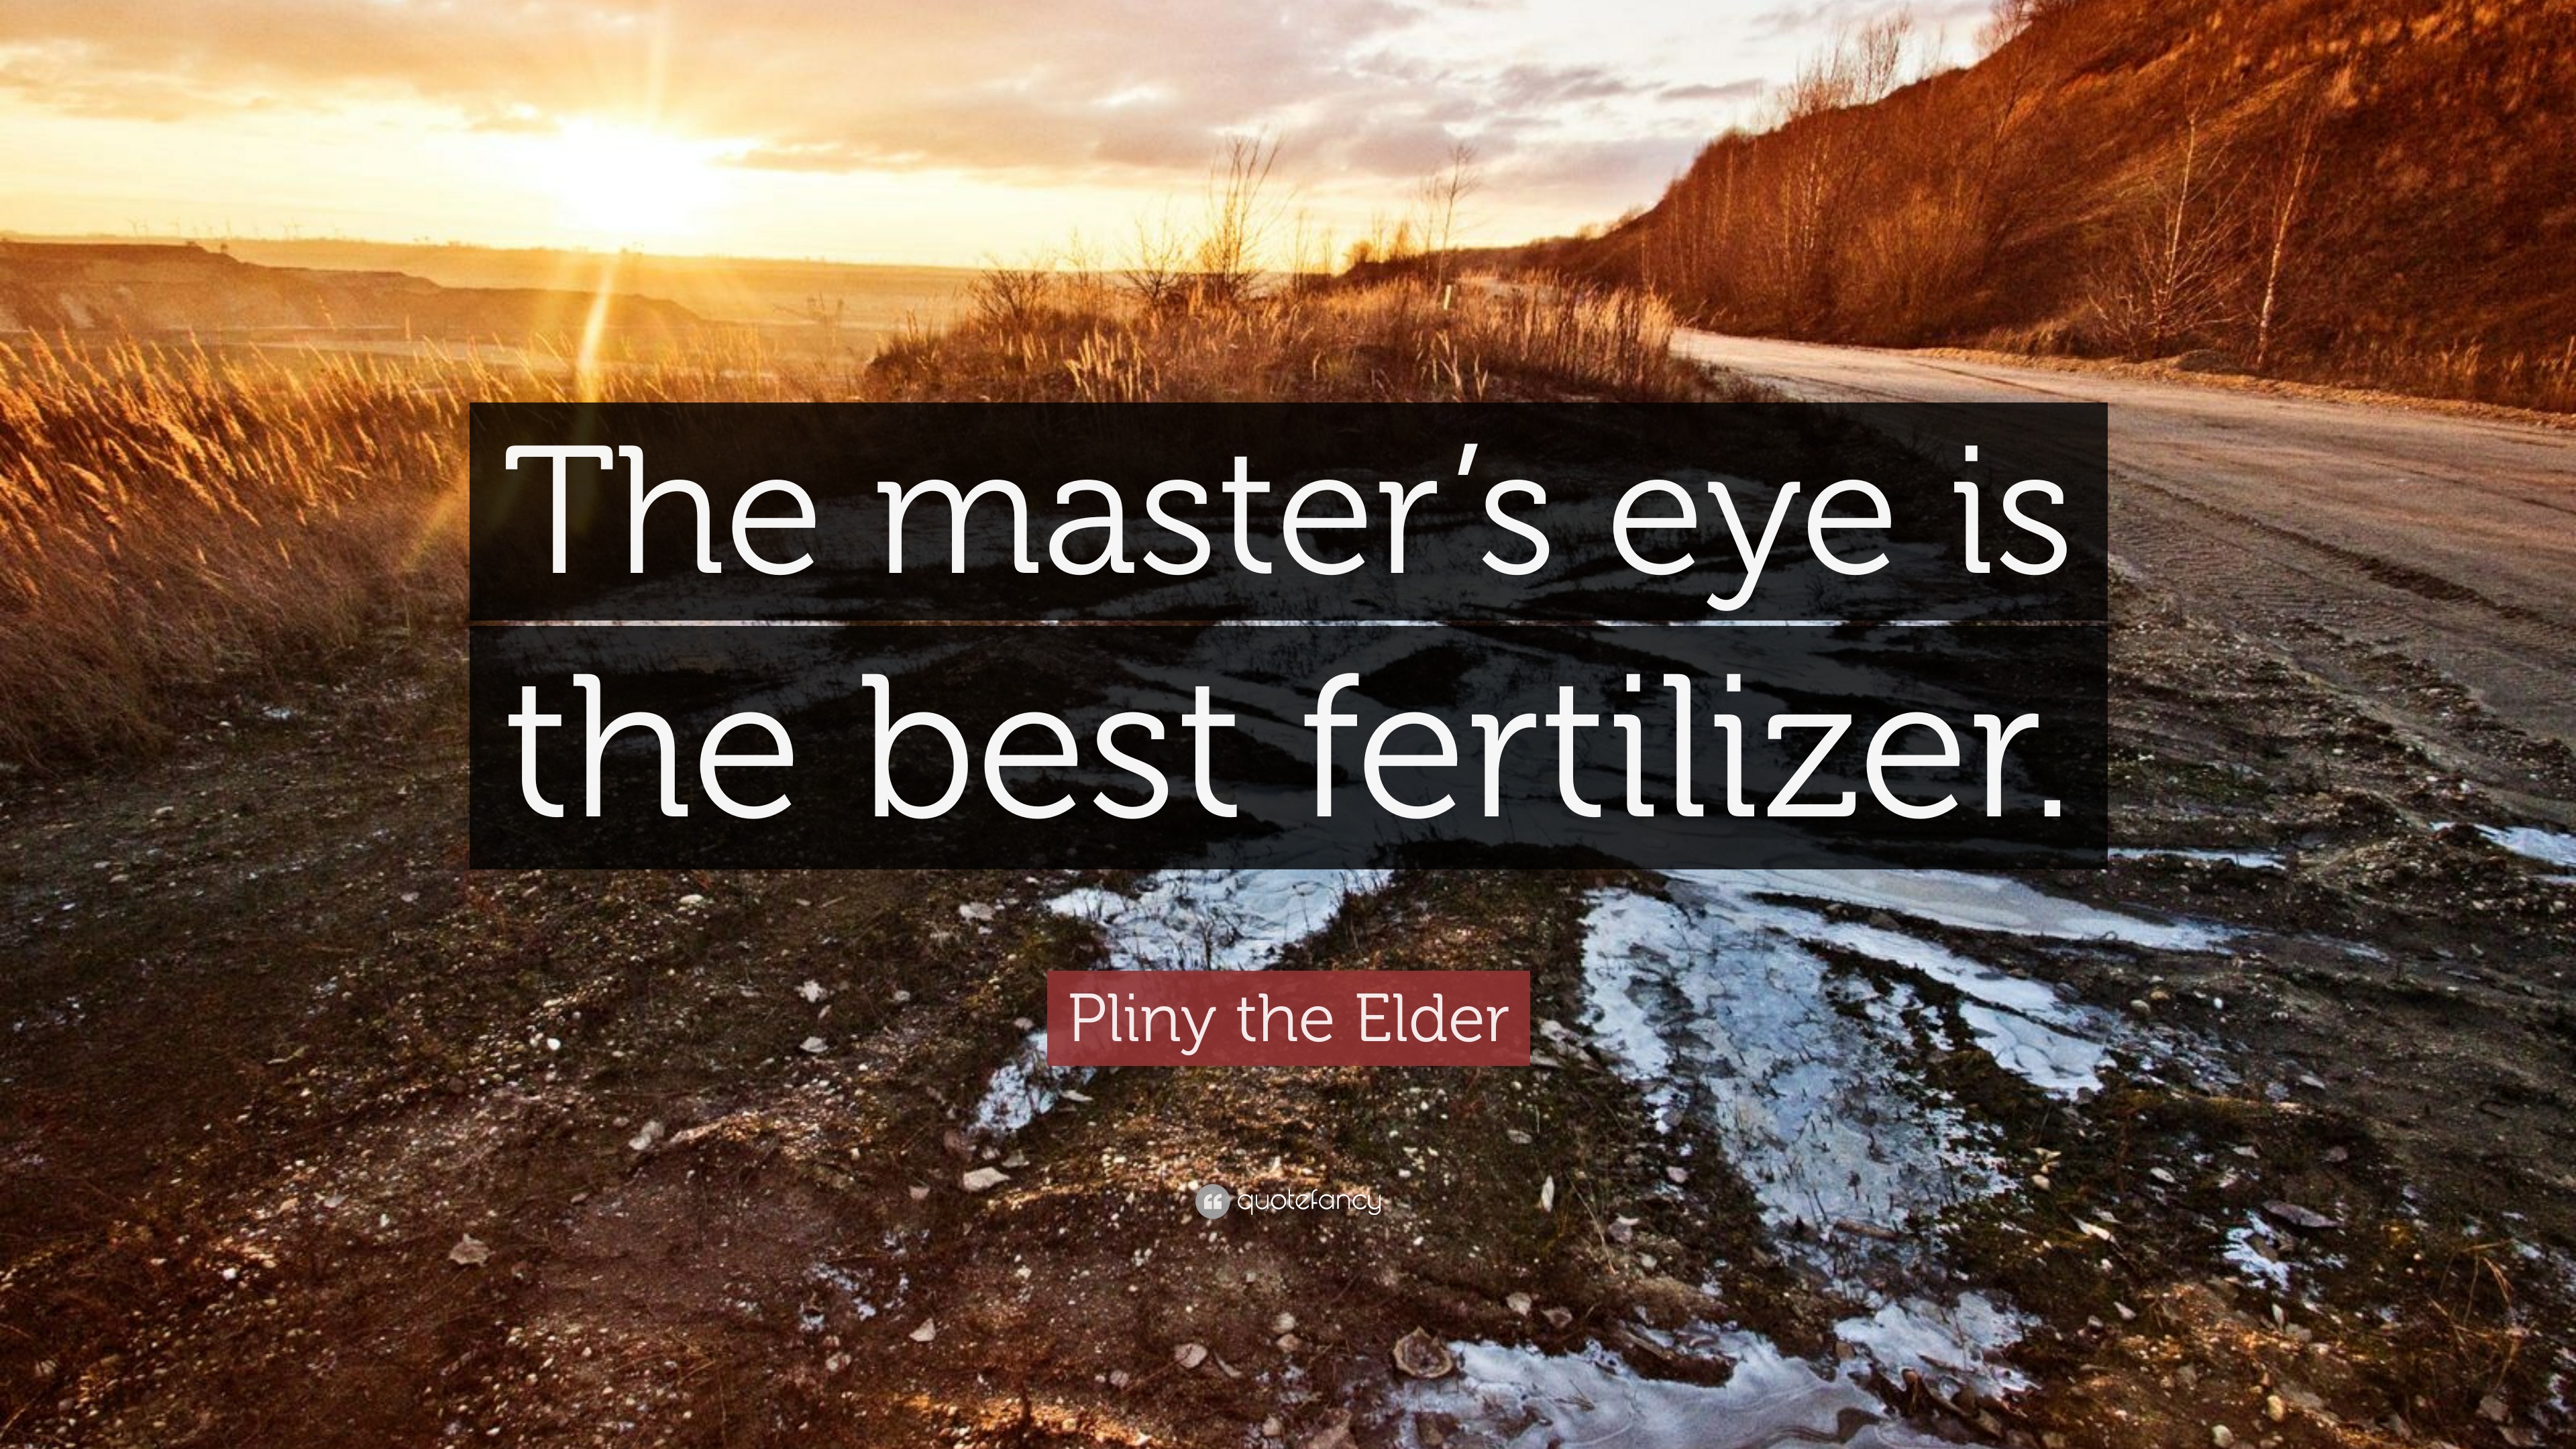 Pliny the Elder Quote: “The master's eye is the best fertilizer.”